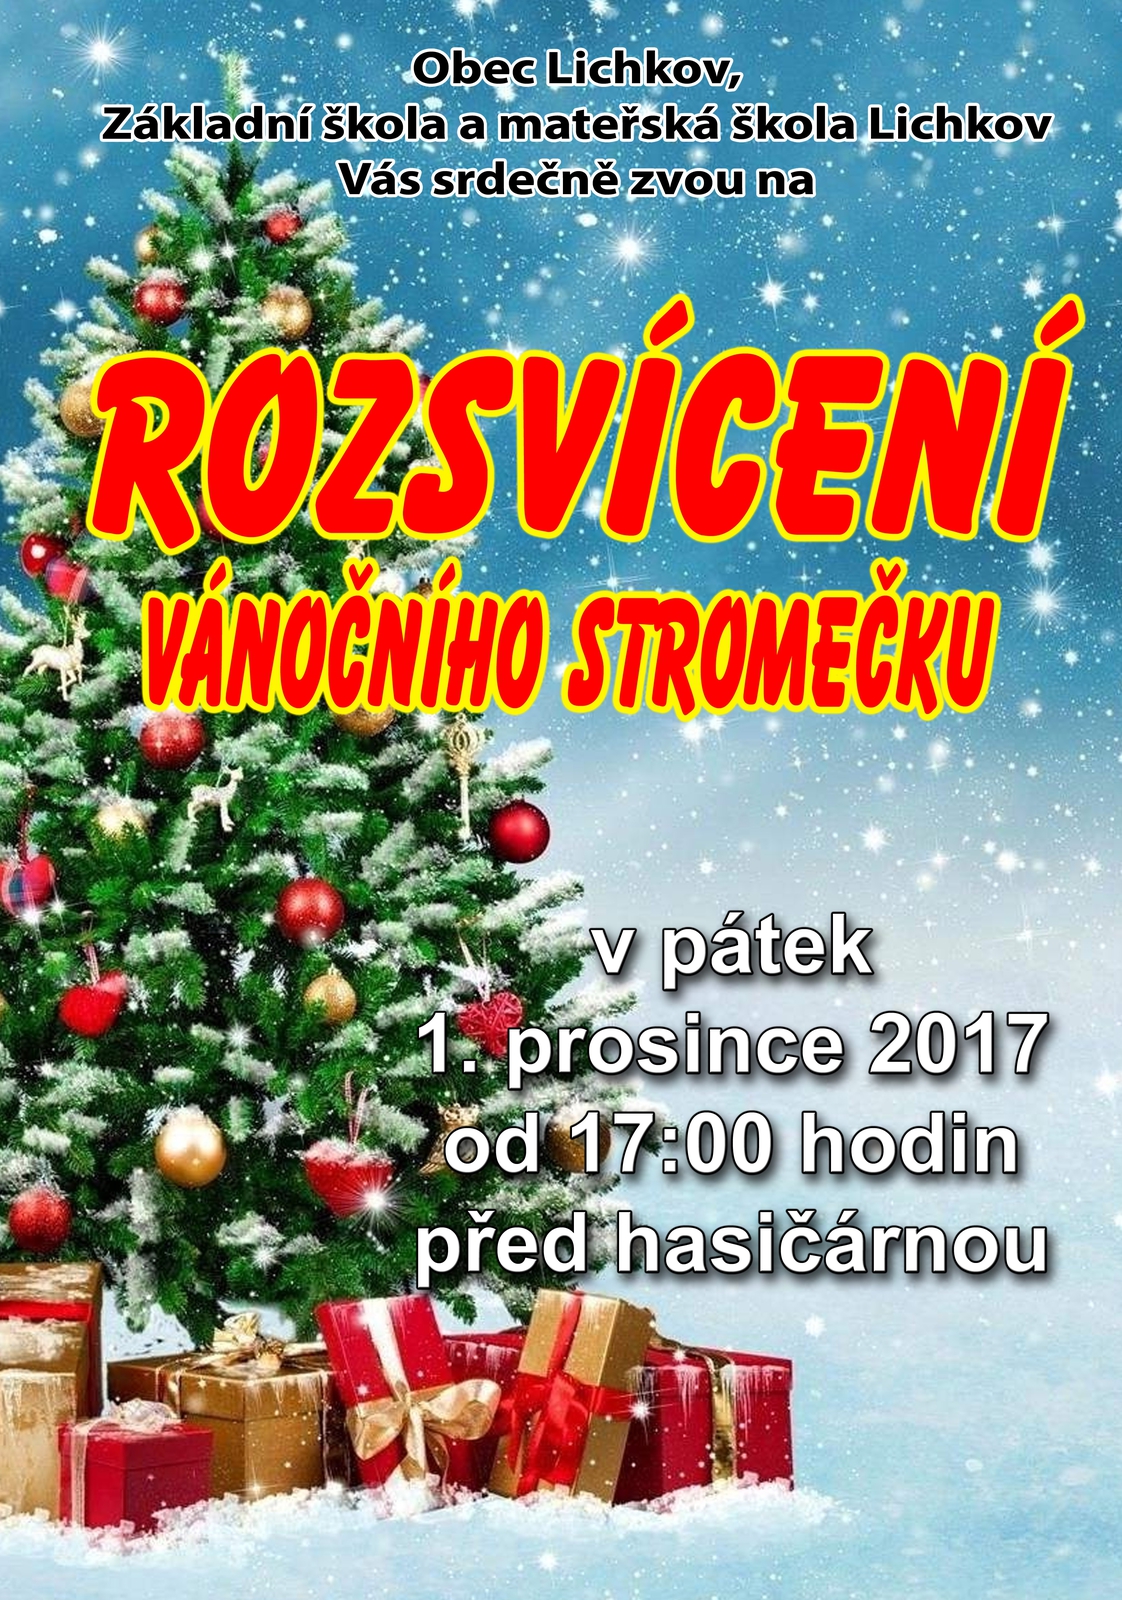 ZŠ Lichkov - vánoční stromeček 2017.JPG